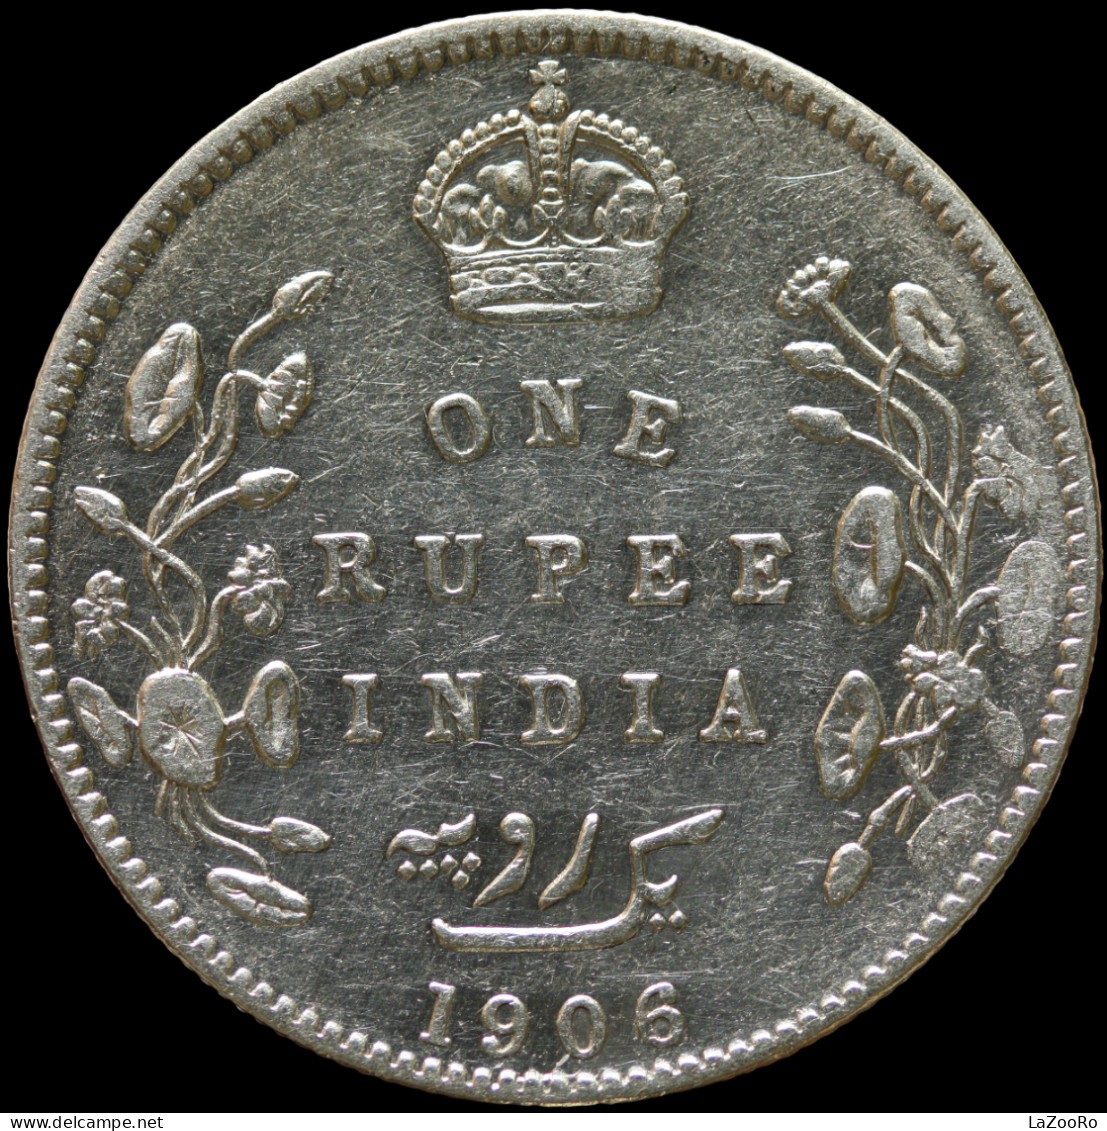 LaZooRo: British India 1 Rupee 1906 XF - Silver - Colonie